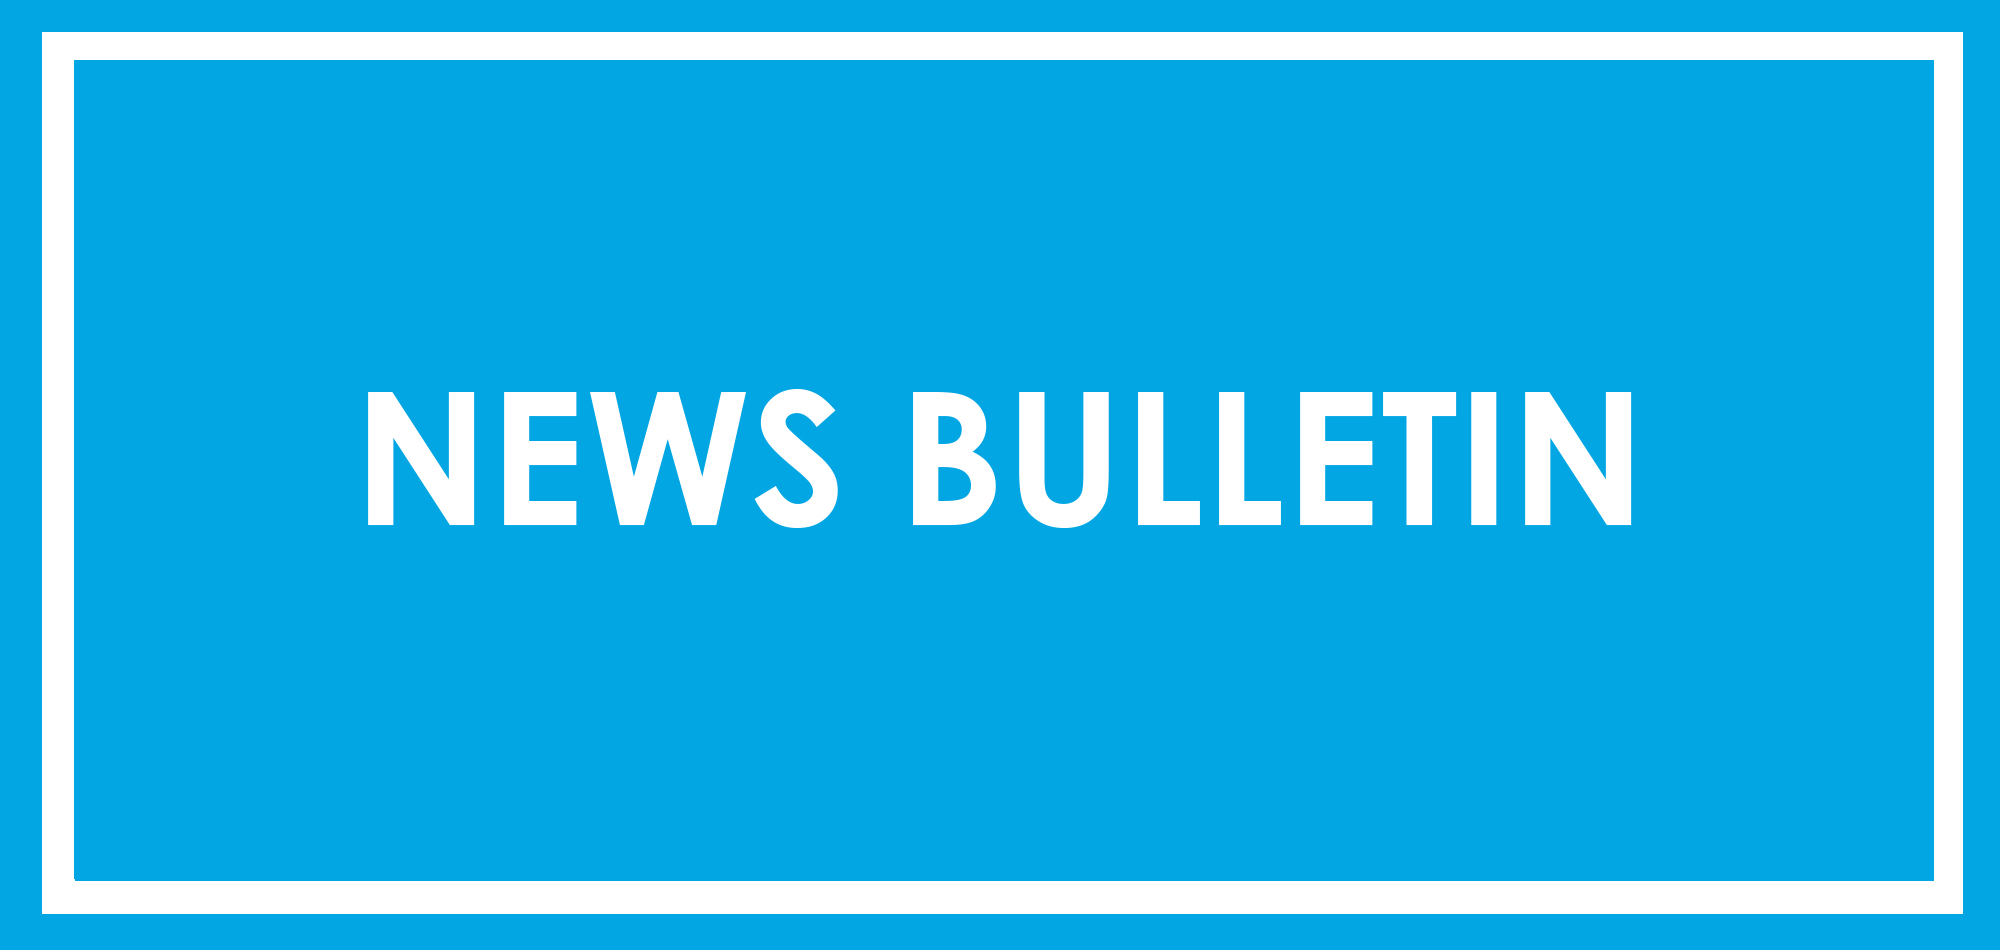 News Bulletin - 27.03.22